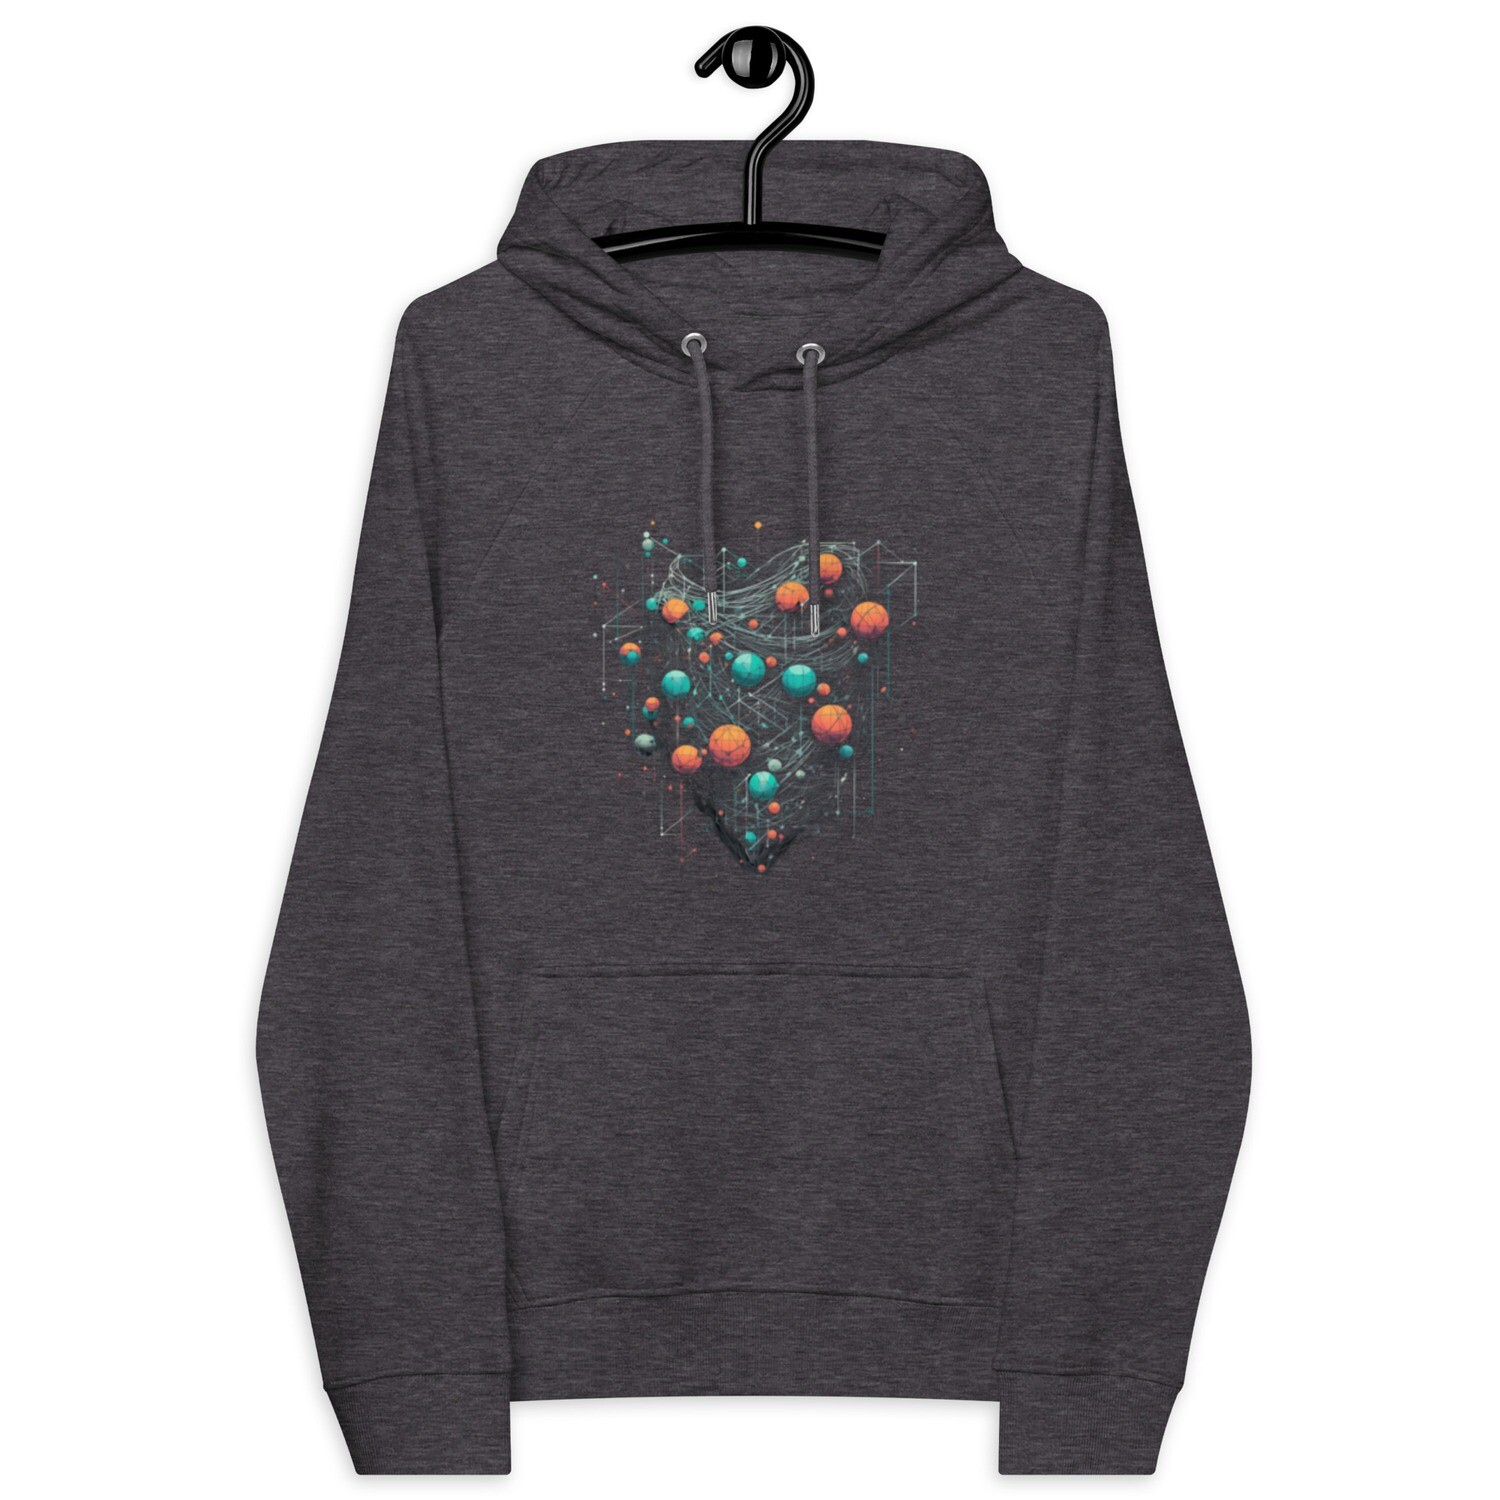 Unisex Cosmic Connection hoodie